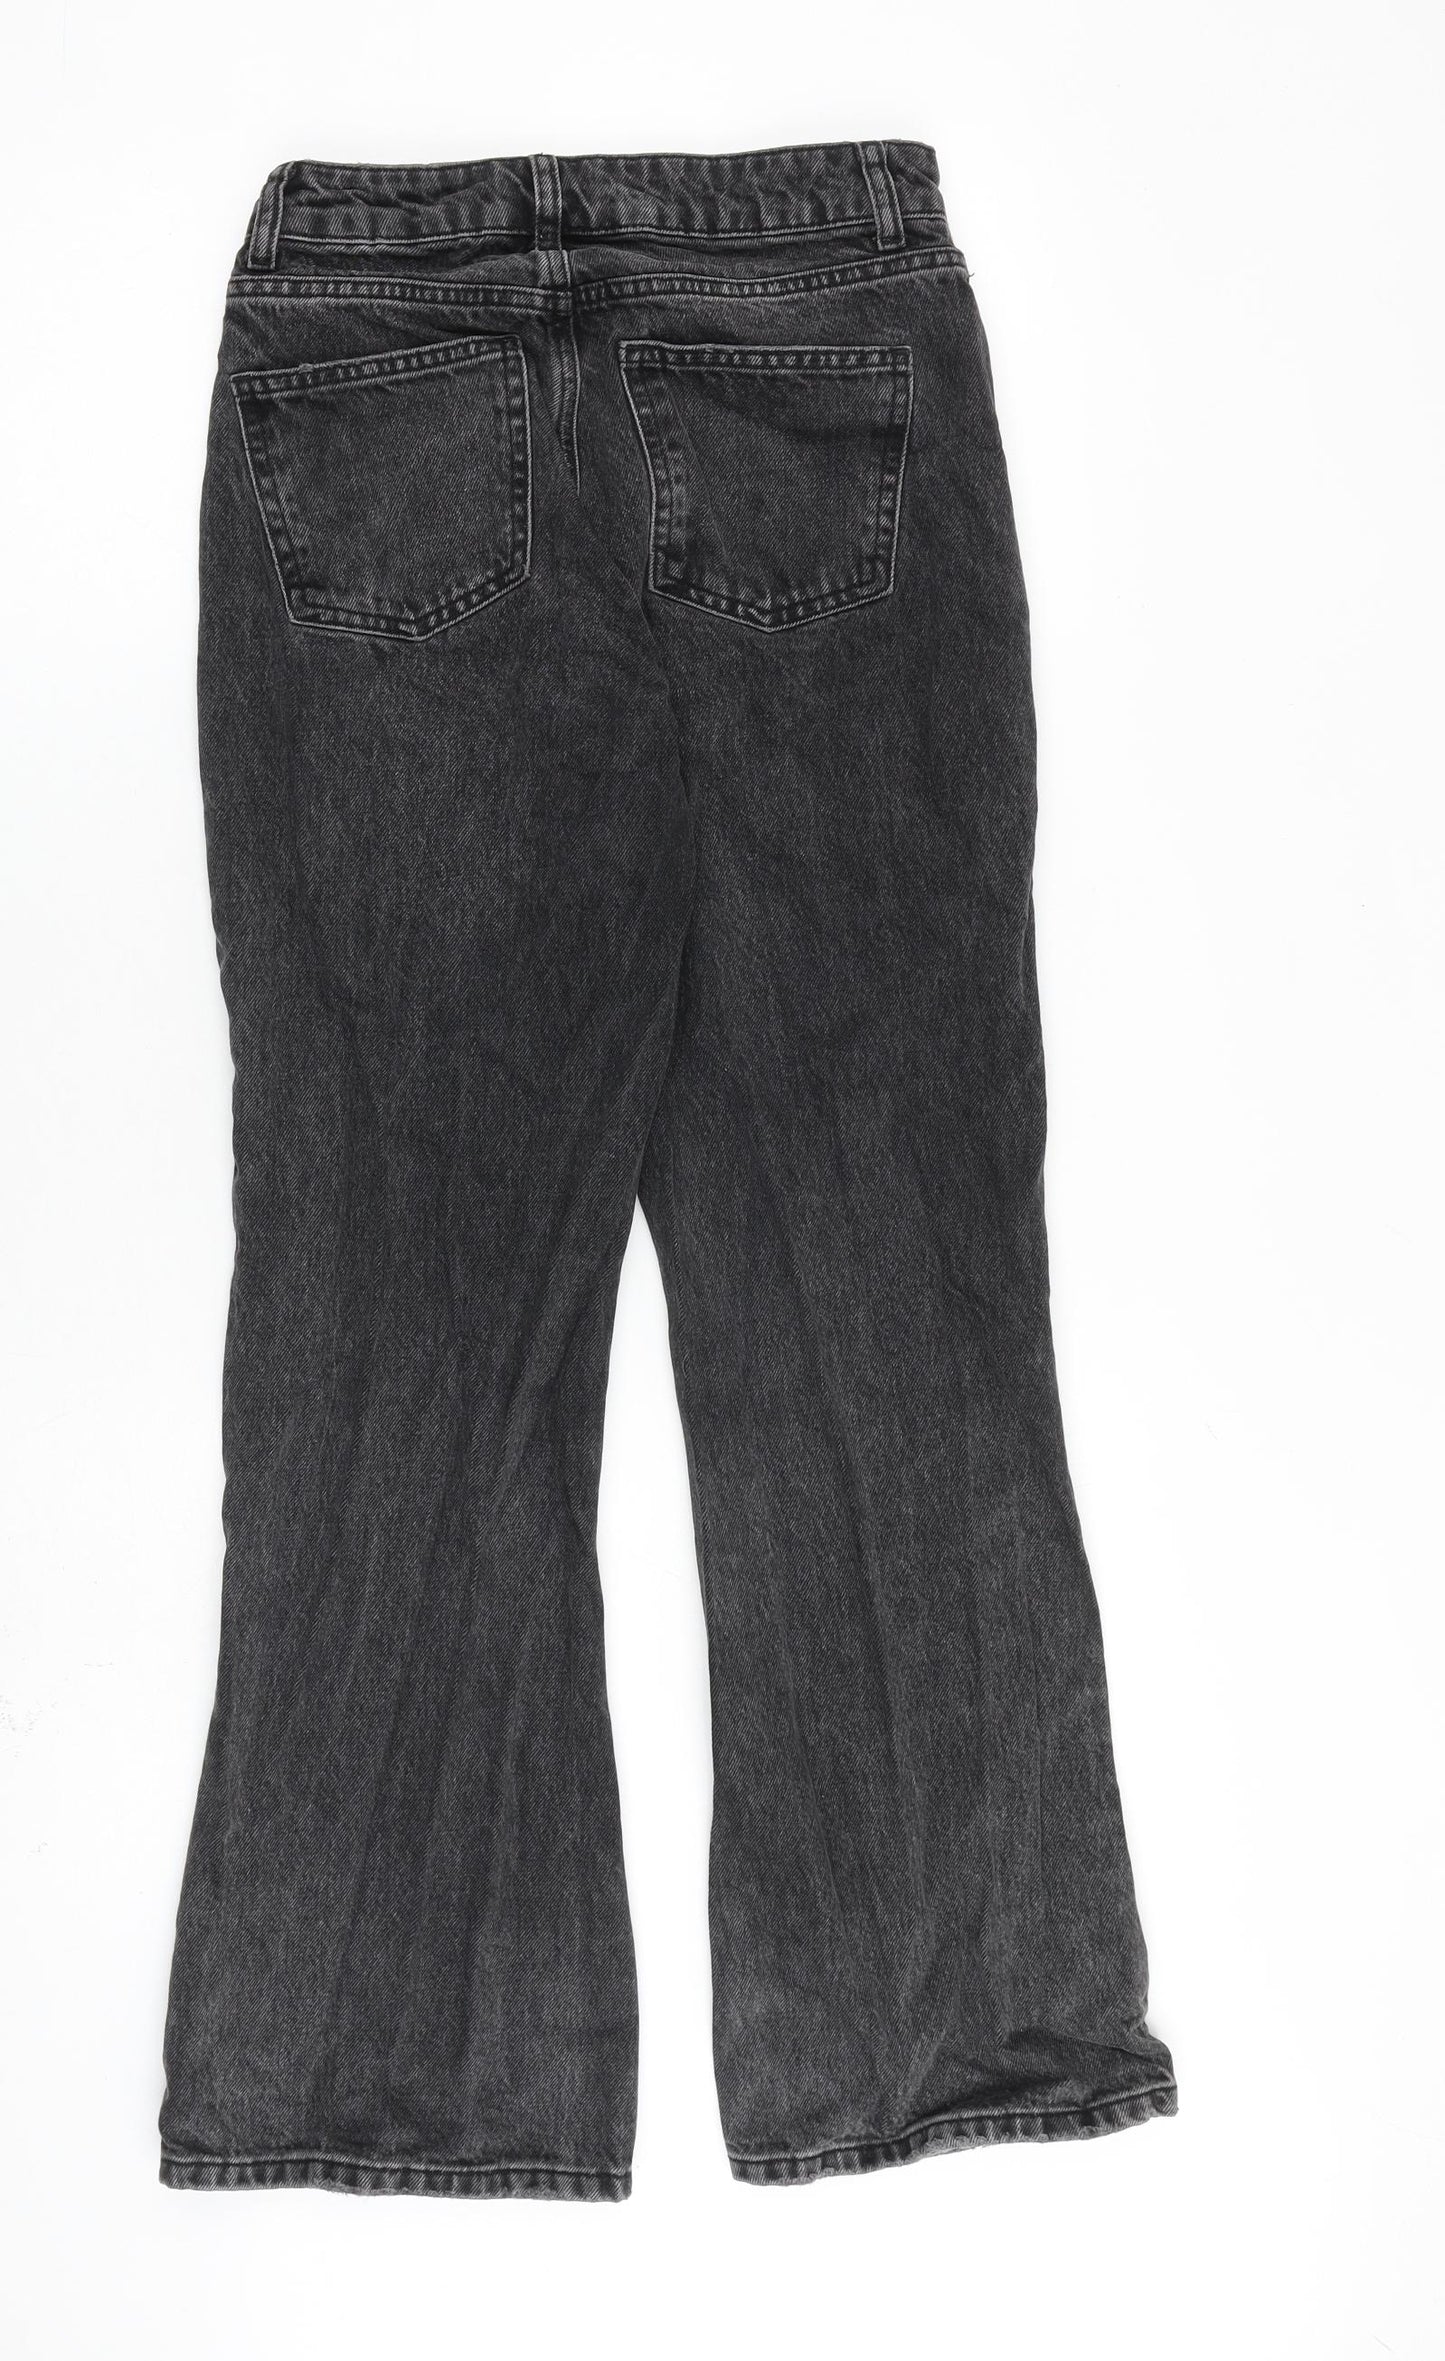 Topshop Womens Grey Cotton Wide-Leg Jeans Size 26 in L30 in Regular Zip